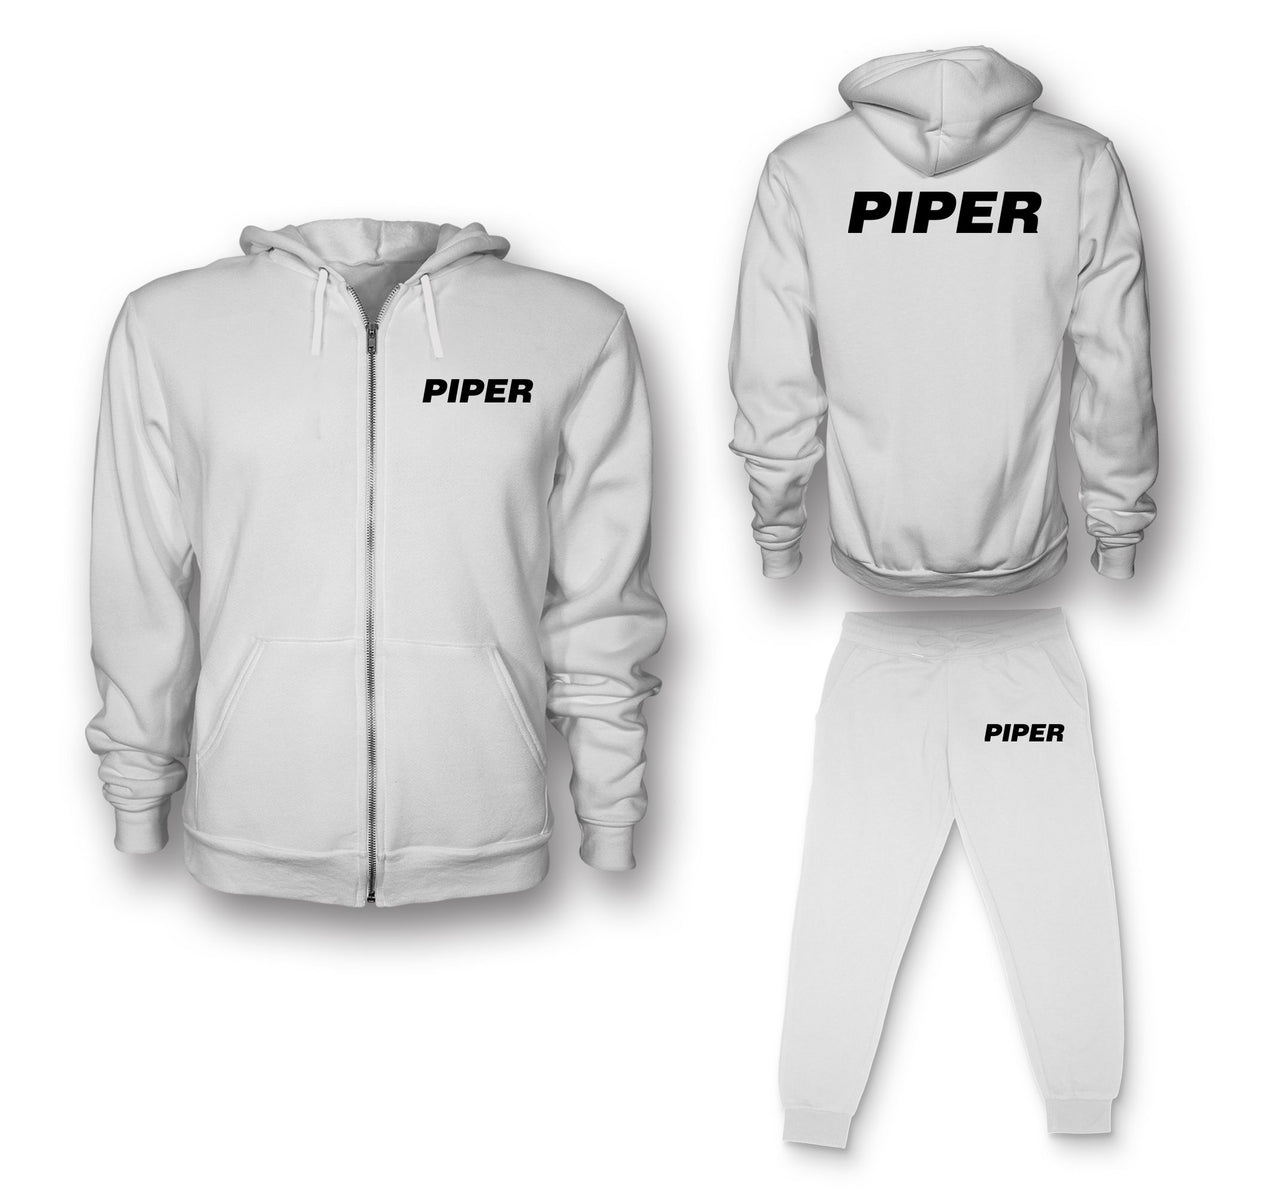 Piper & Text Designed Zipped Hoodies & Sweatpants Set